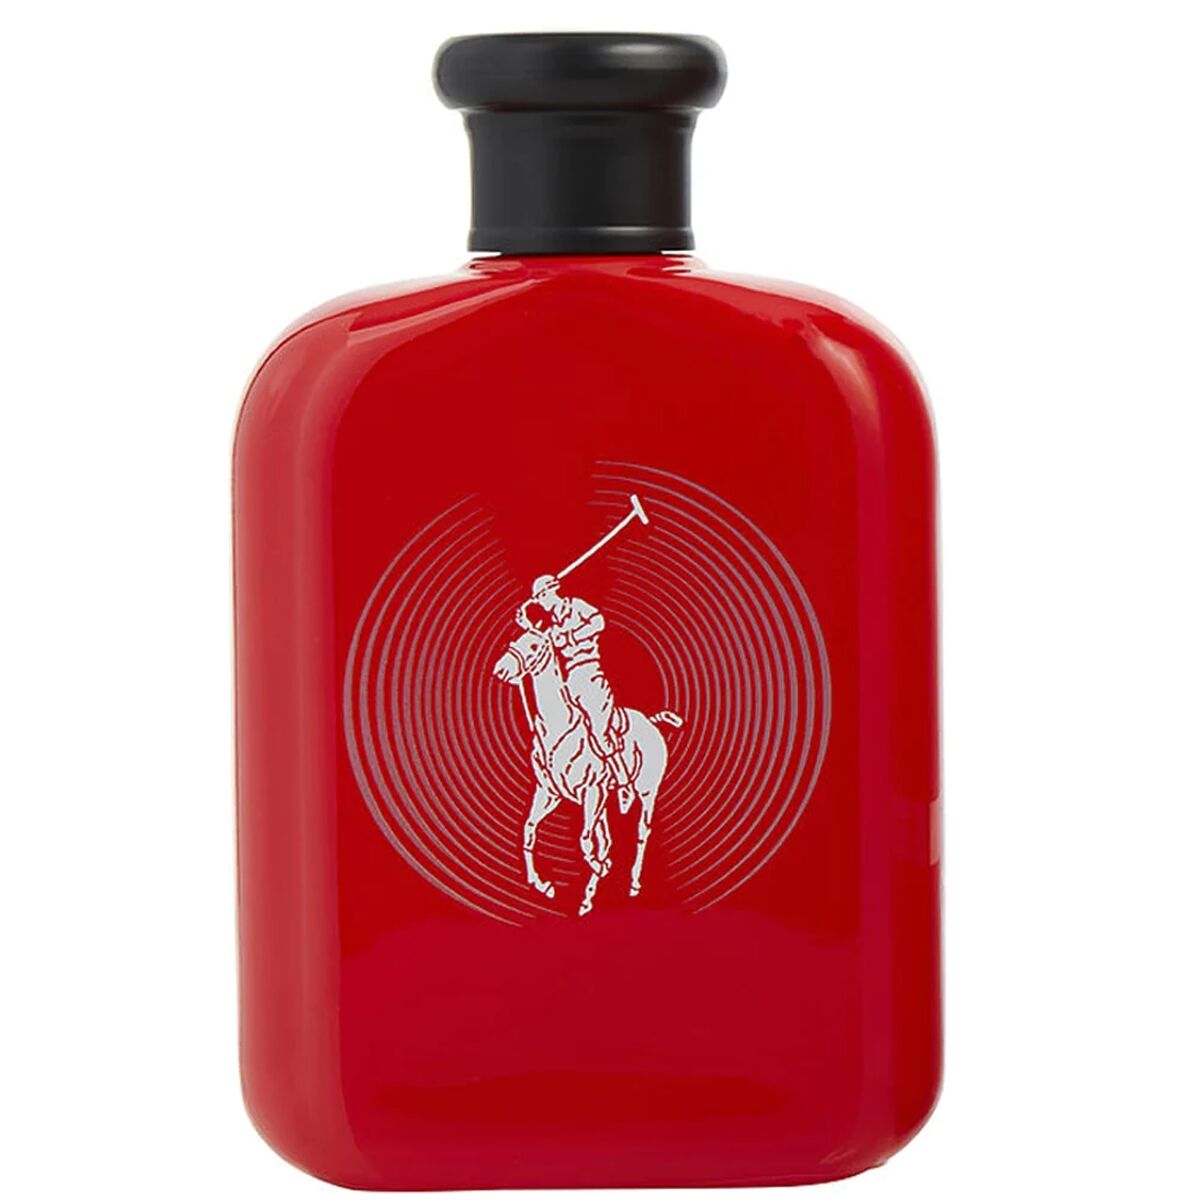 Parfum Homme Ralph Lauren EDT Polo Red Remix & Ansel Elgort 125 ml